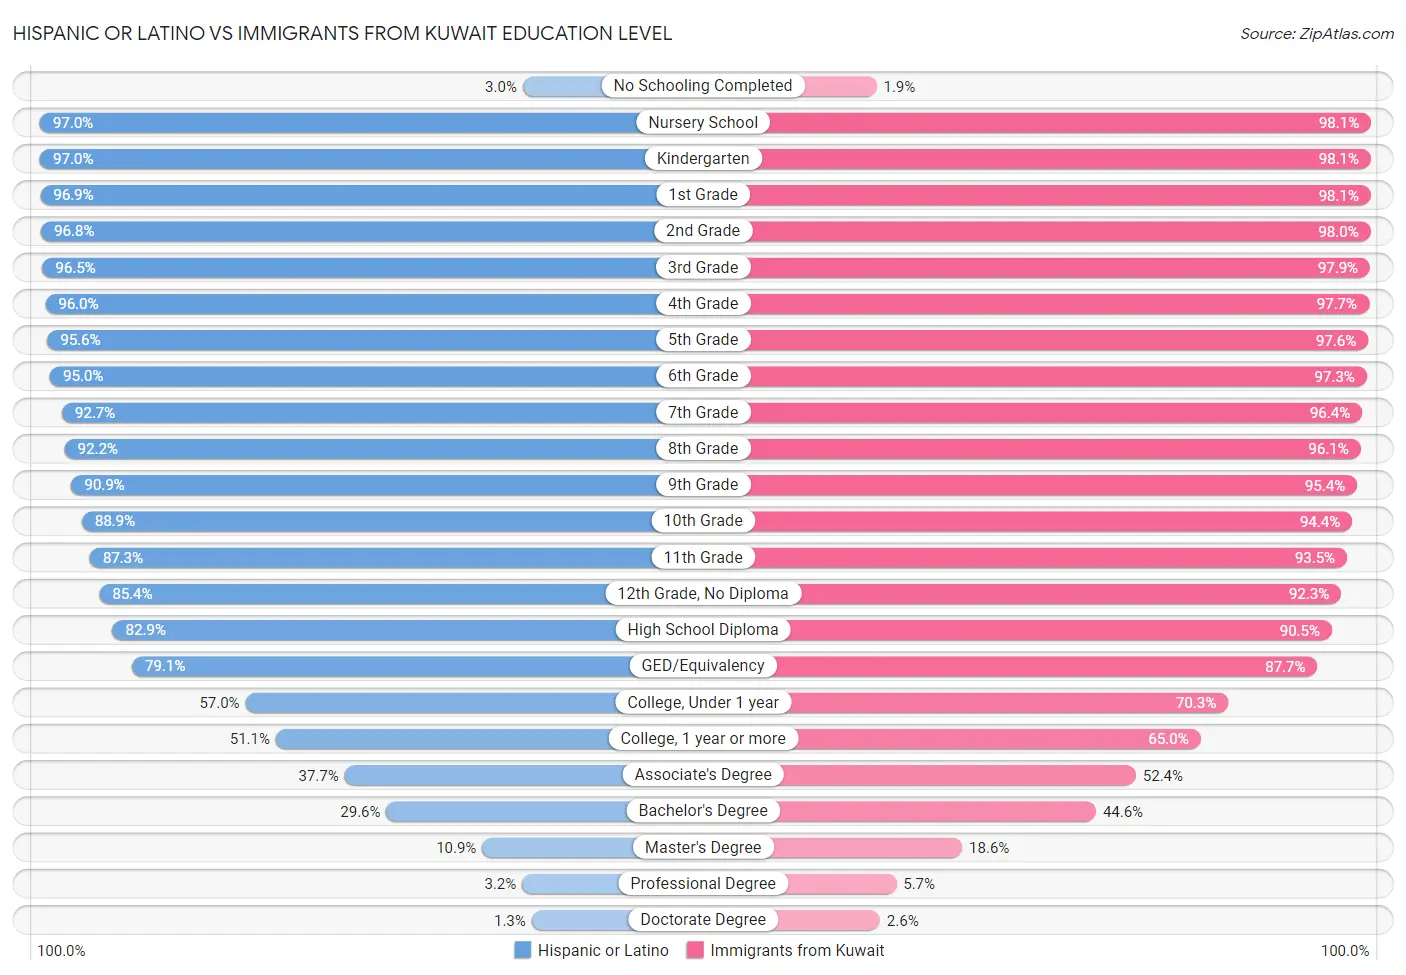 Hispanic or Latino vs Immigrants from Kuwait Education Level